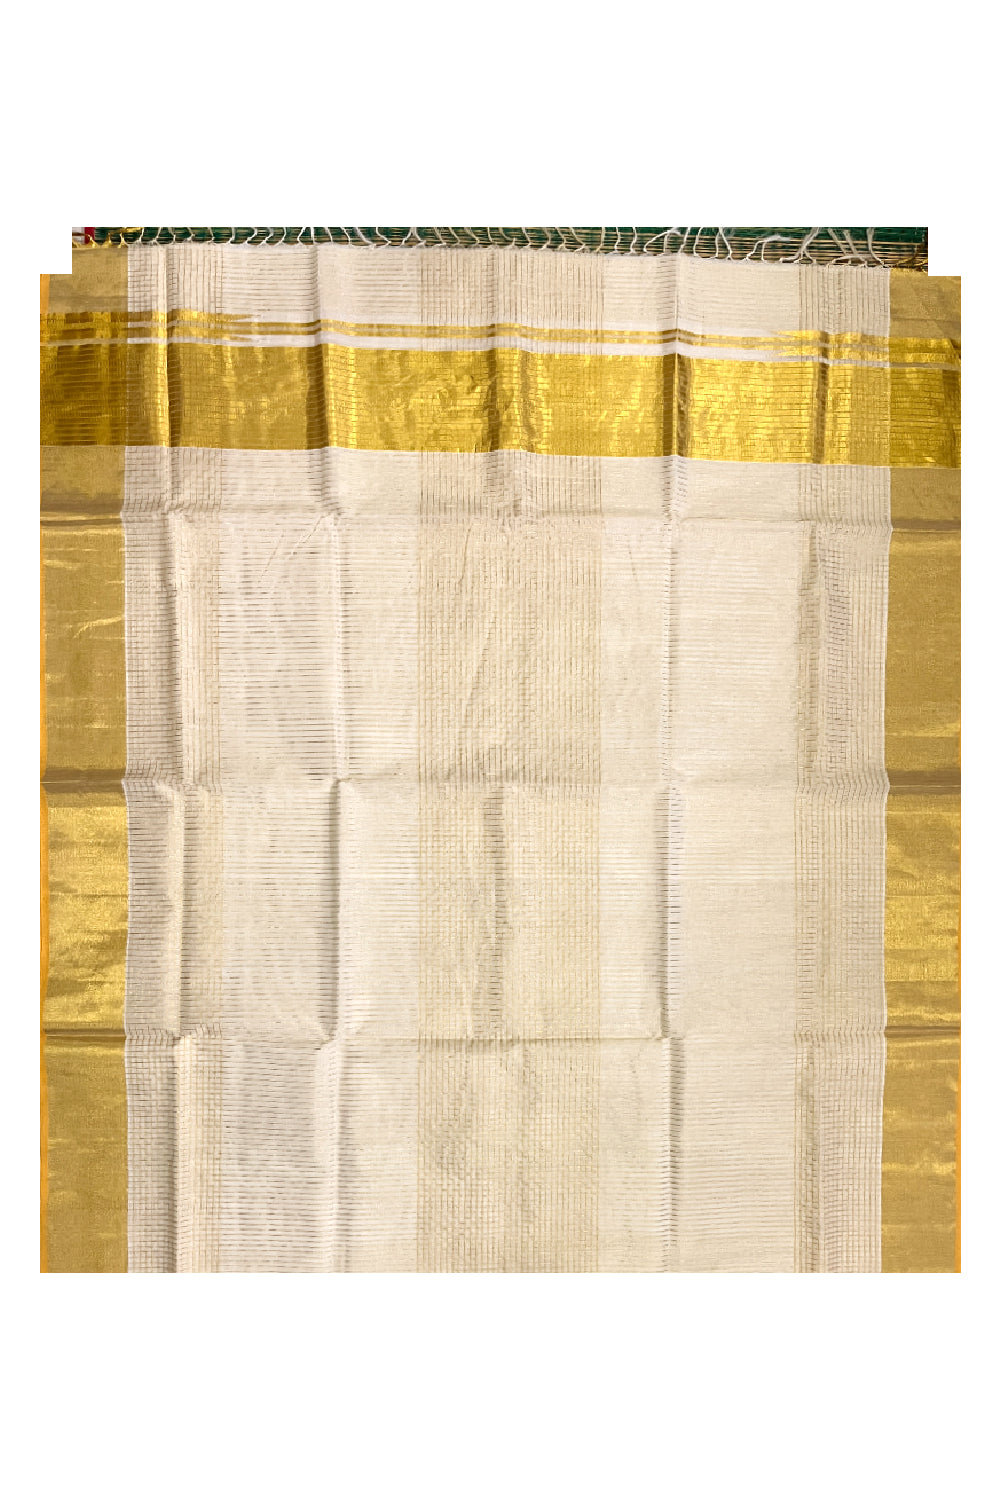 Southloom Premium Handloom Cotton Saree with Check Designs Across Body